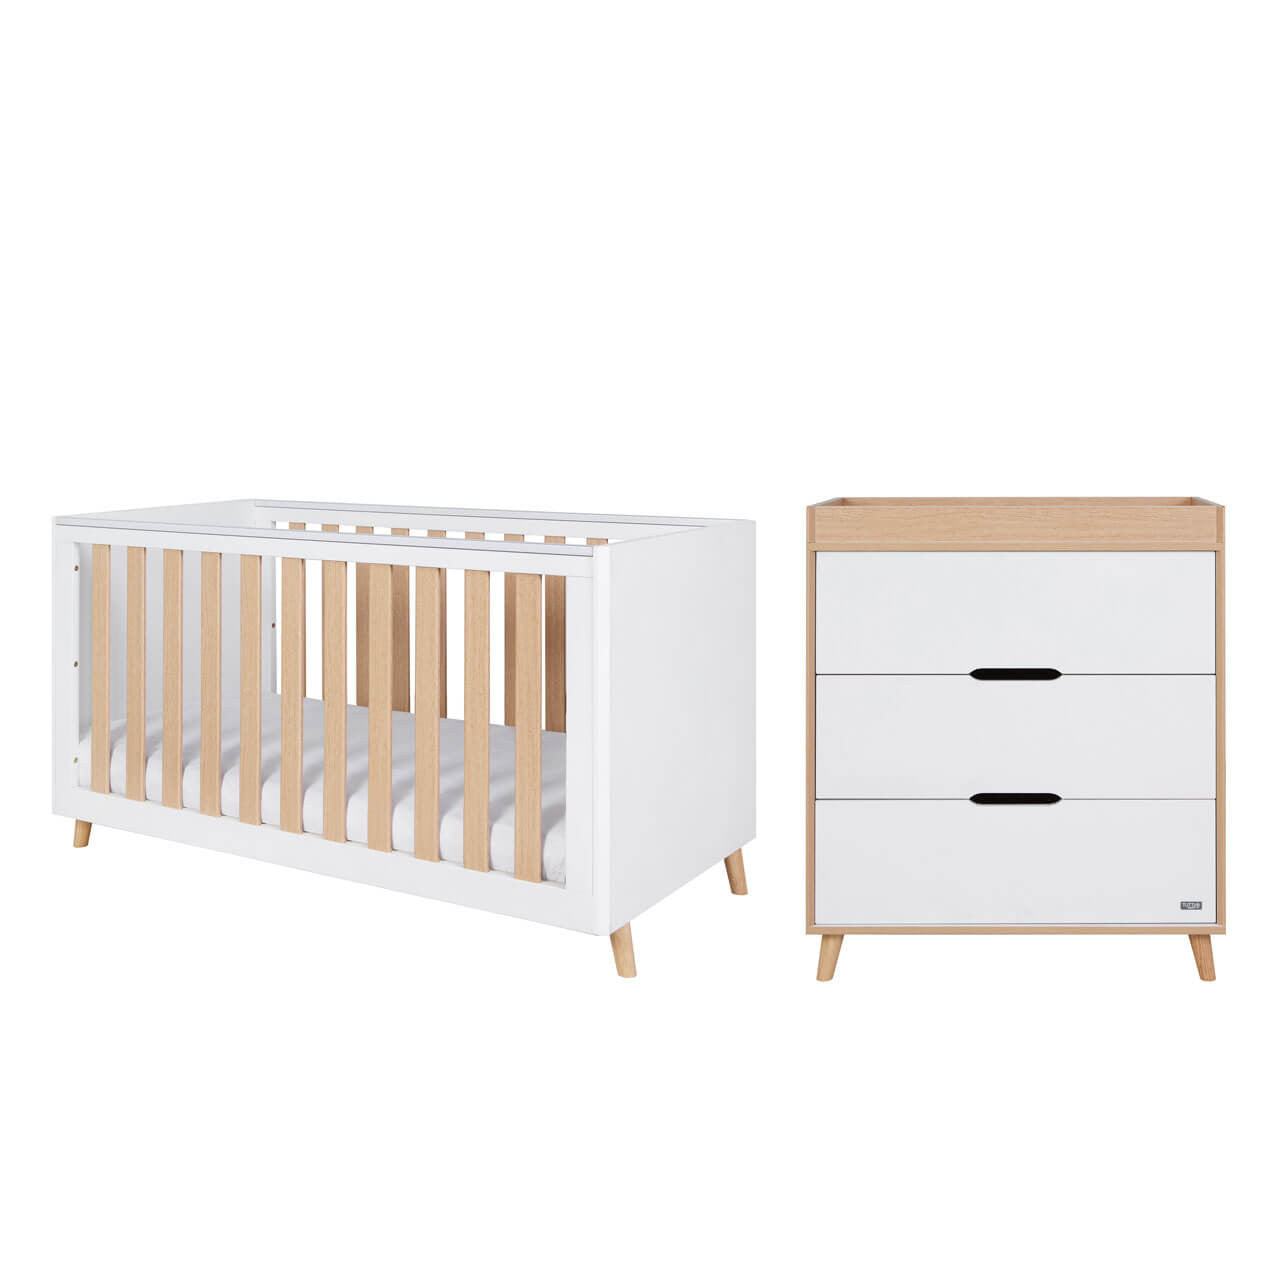 Tutti Bambini Fika 2 Piece Room Set - White/Light Oak - For Your Little One